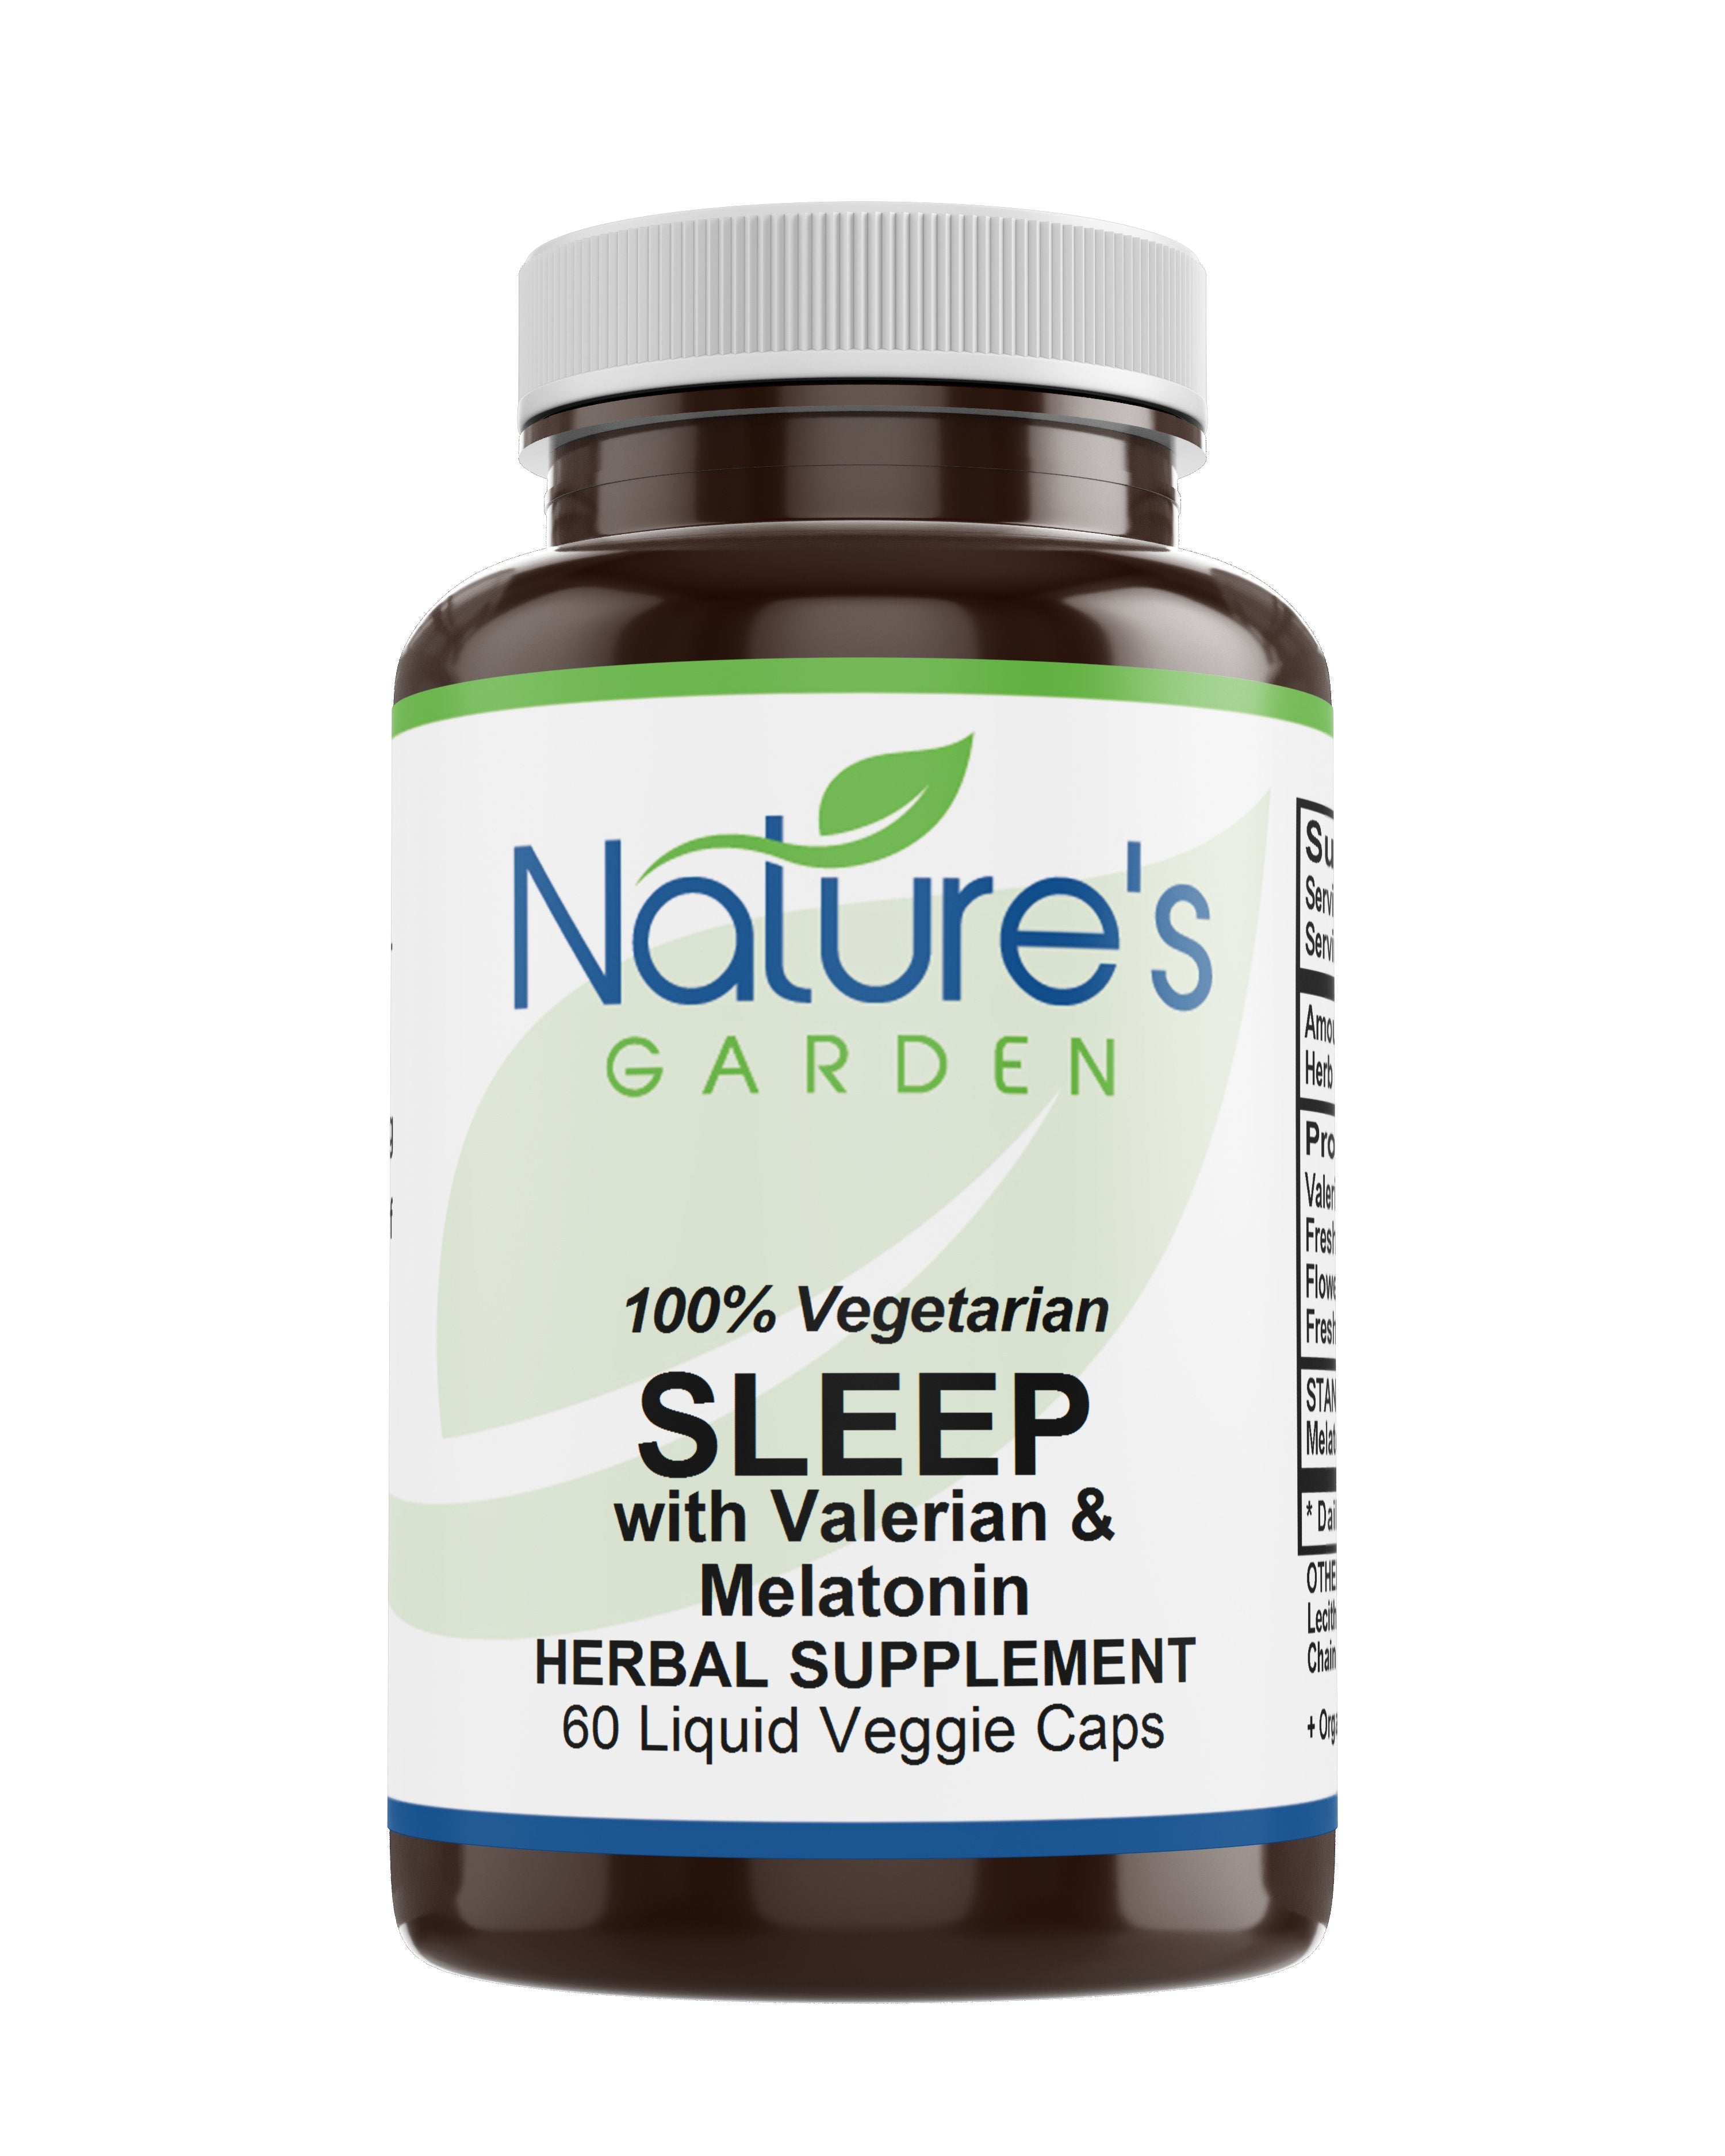 Organic Sleep Formula w/Valerian & Melatonin - 60 Liquid Veggie Caps with Organic Chamomile, Passion Flower, Skullcap, Hops & More!  - Herbal & Non-Habit Forming